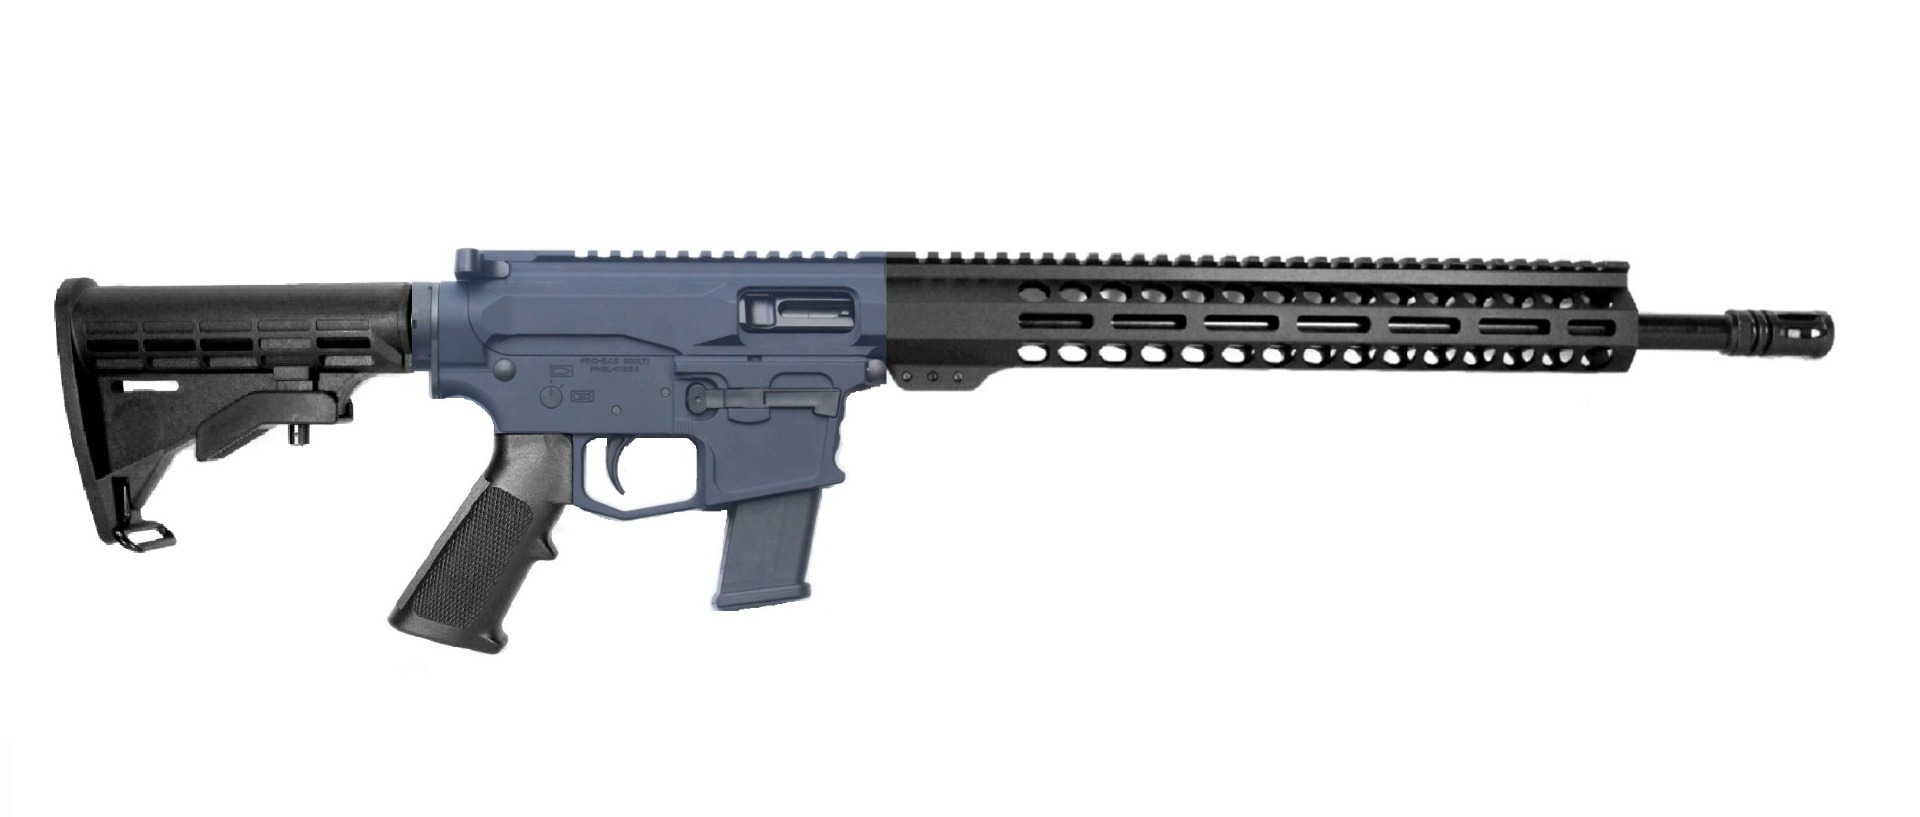 16 inch 9mm Pistol Caliber AR-15 Rifle | Patriot Series 